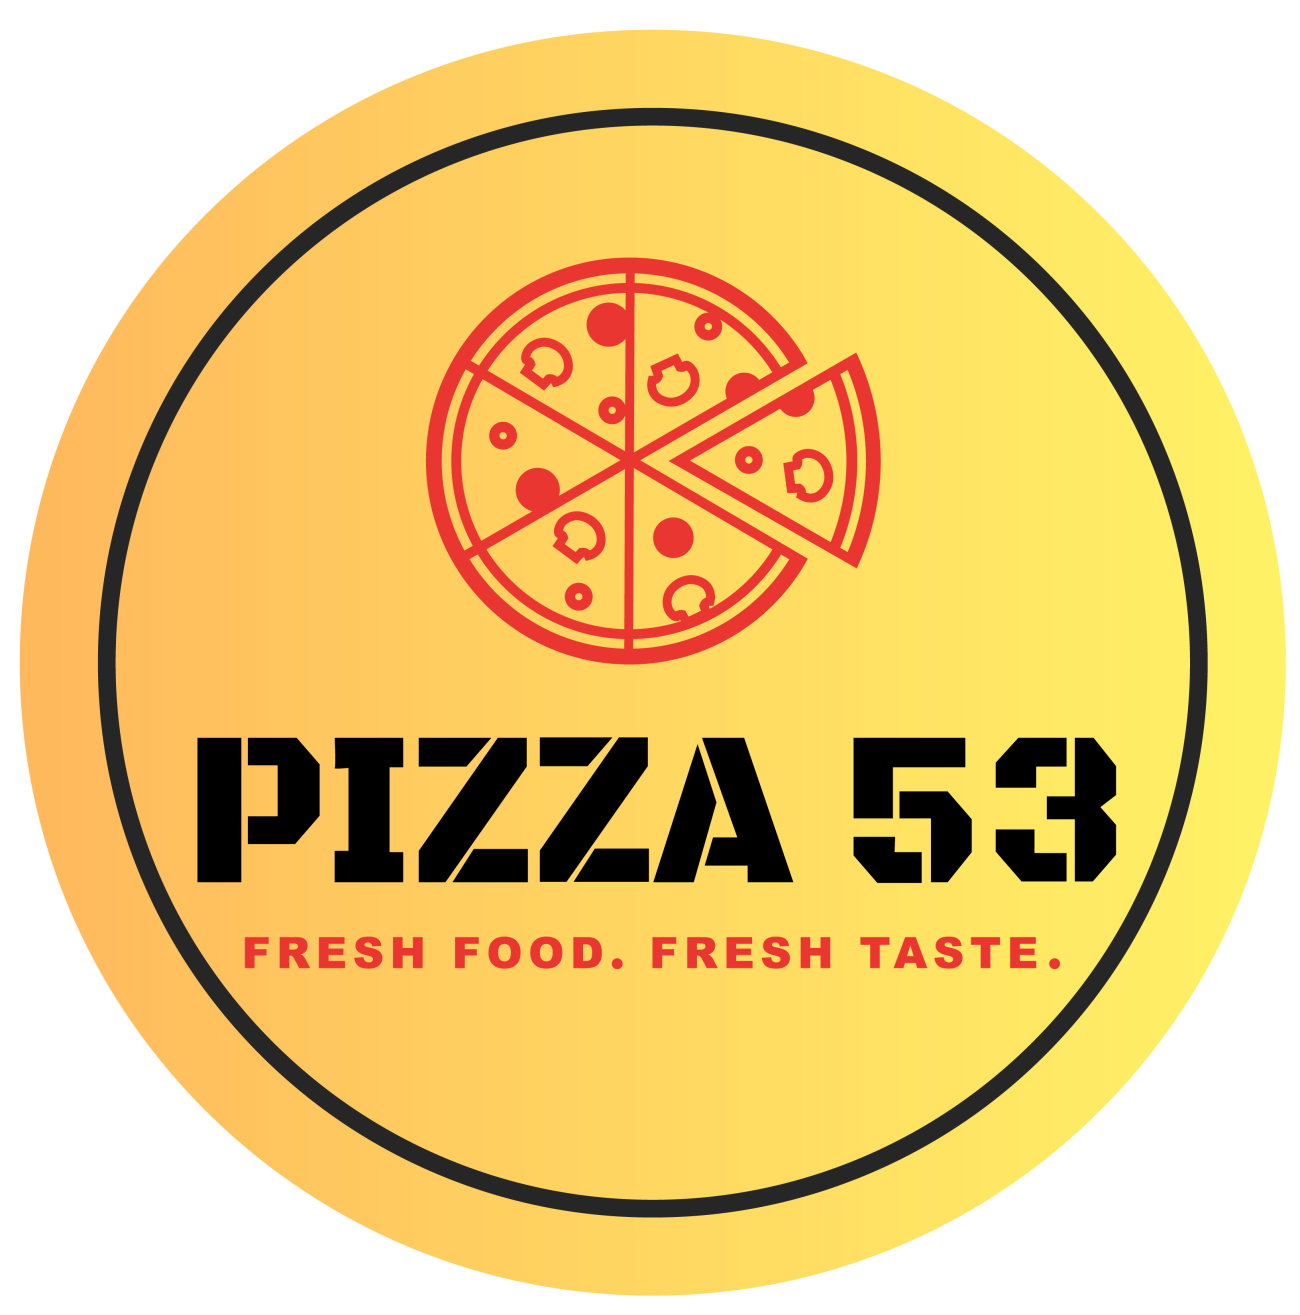 Pizza 53